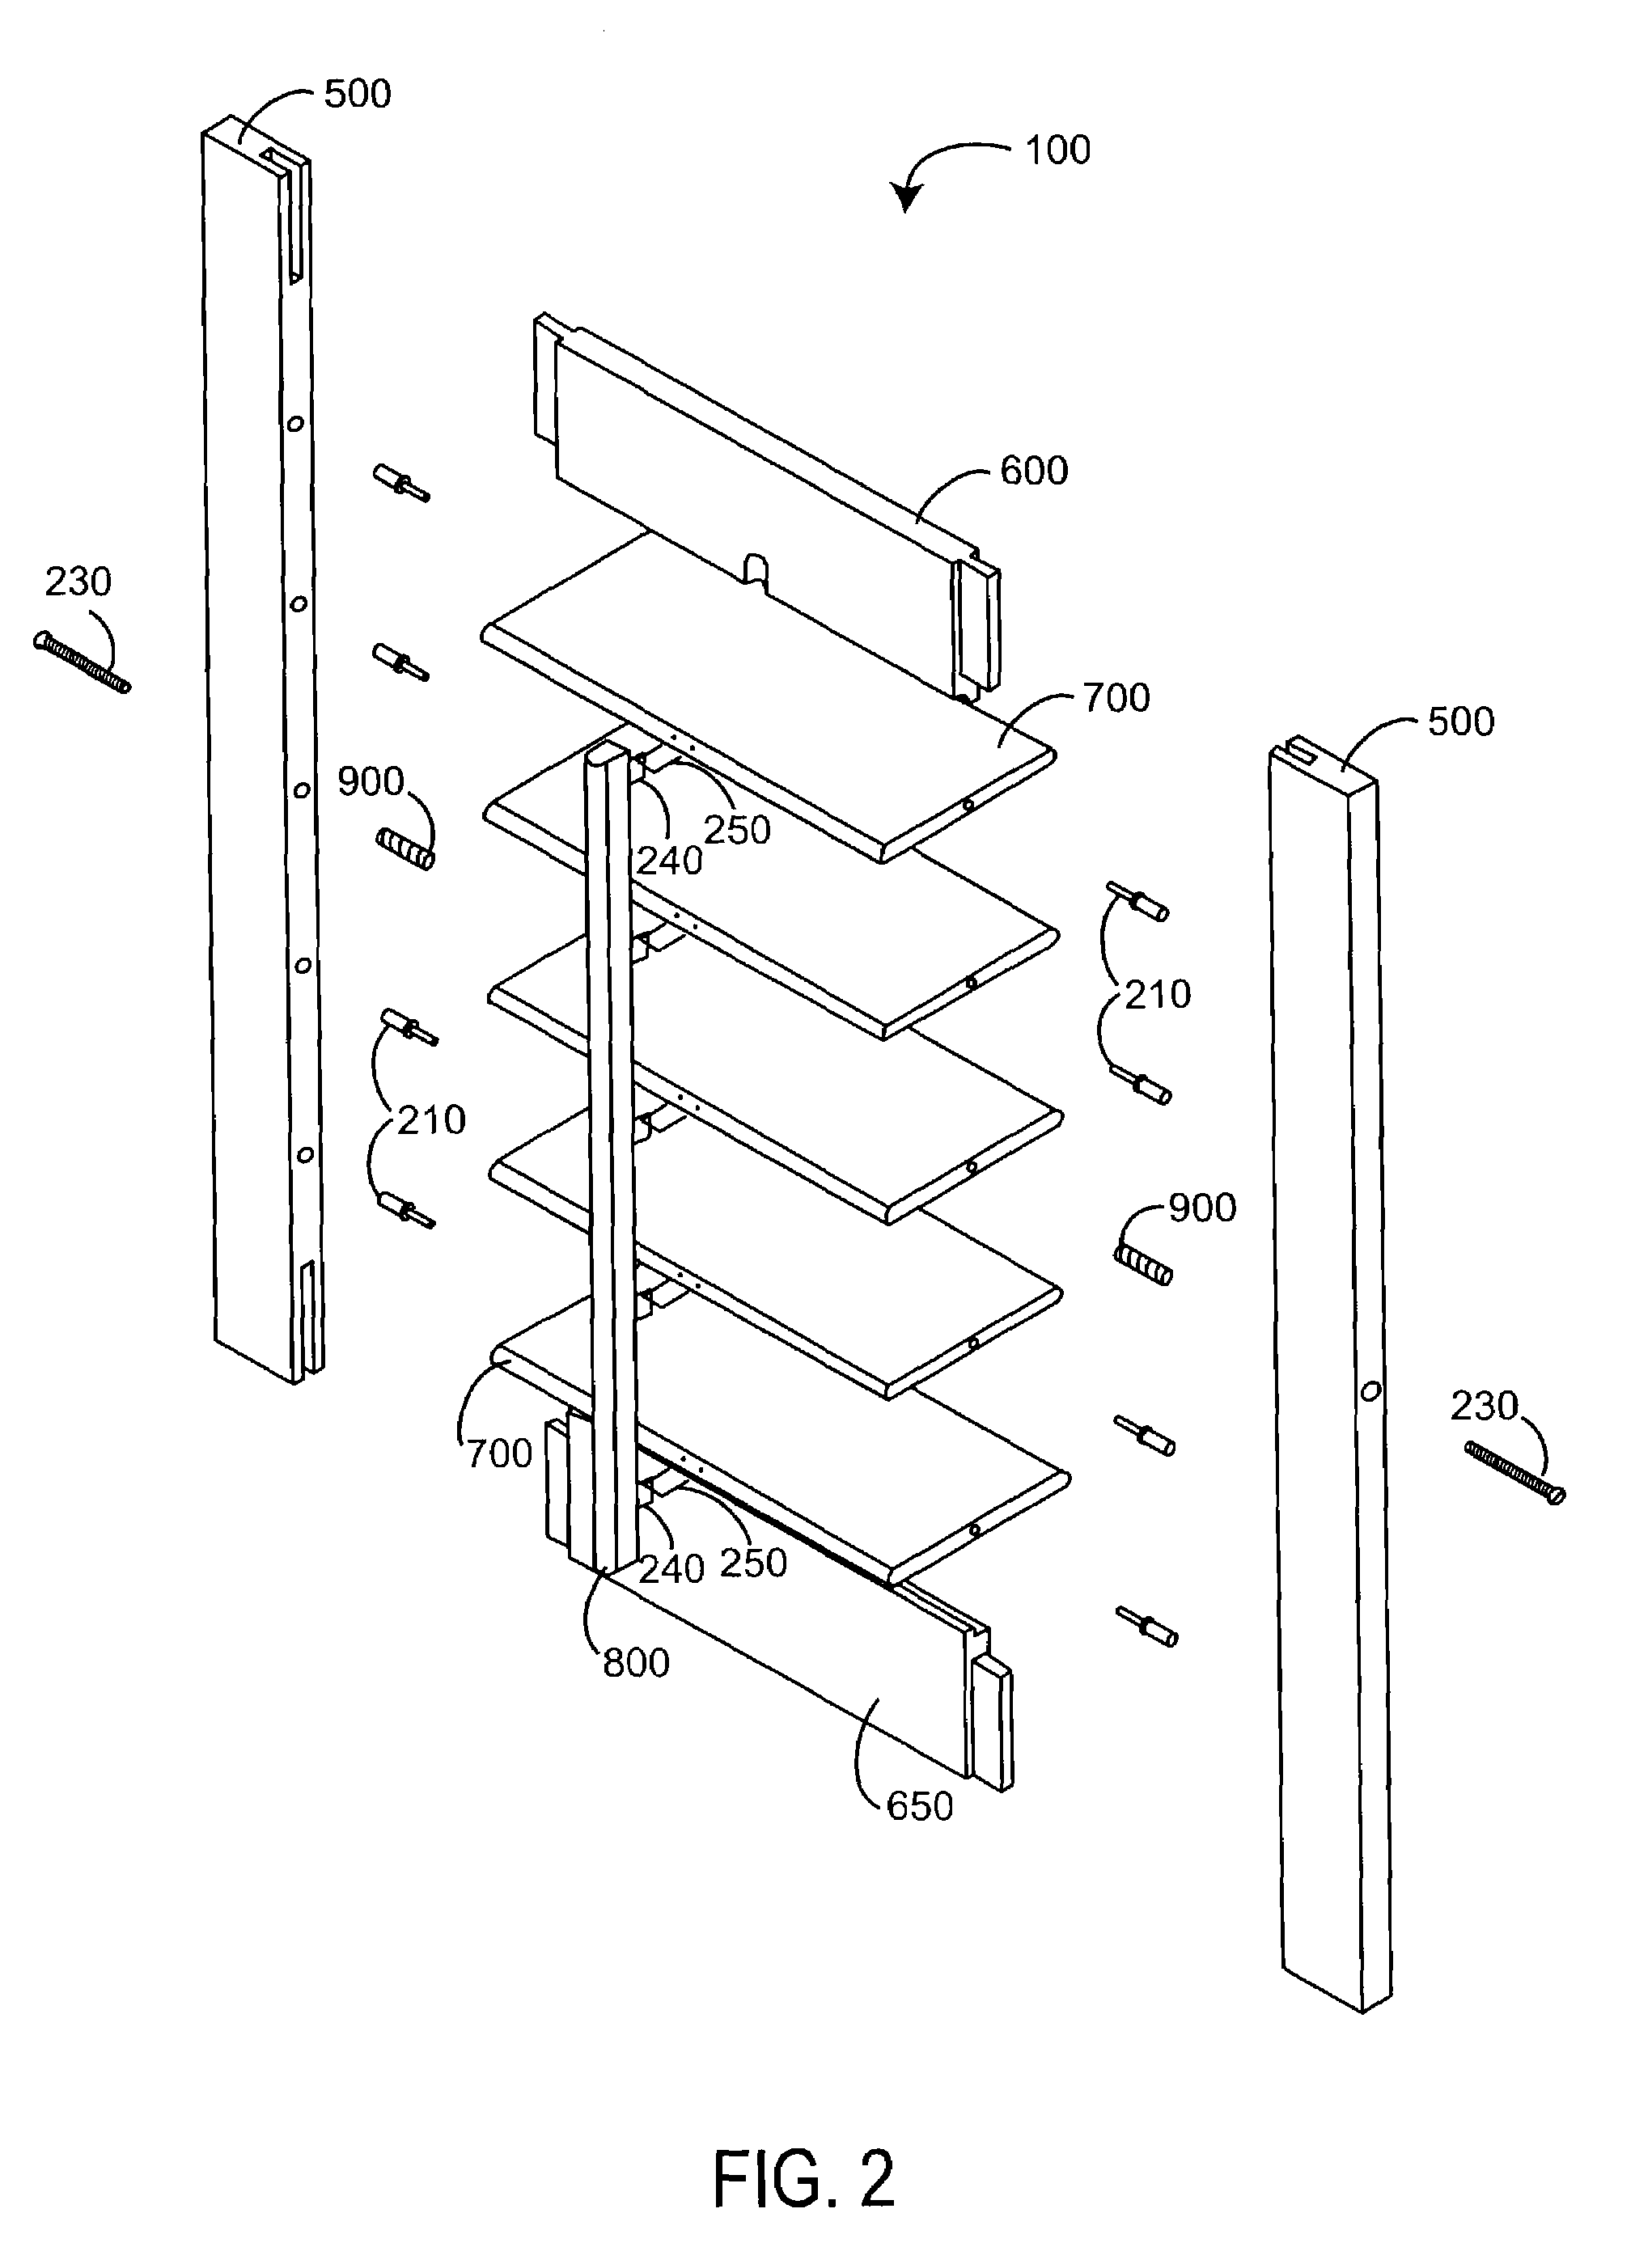 Method of manufacturing a prefinished fiberboard shutter